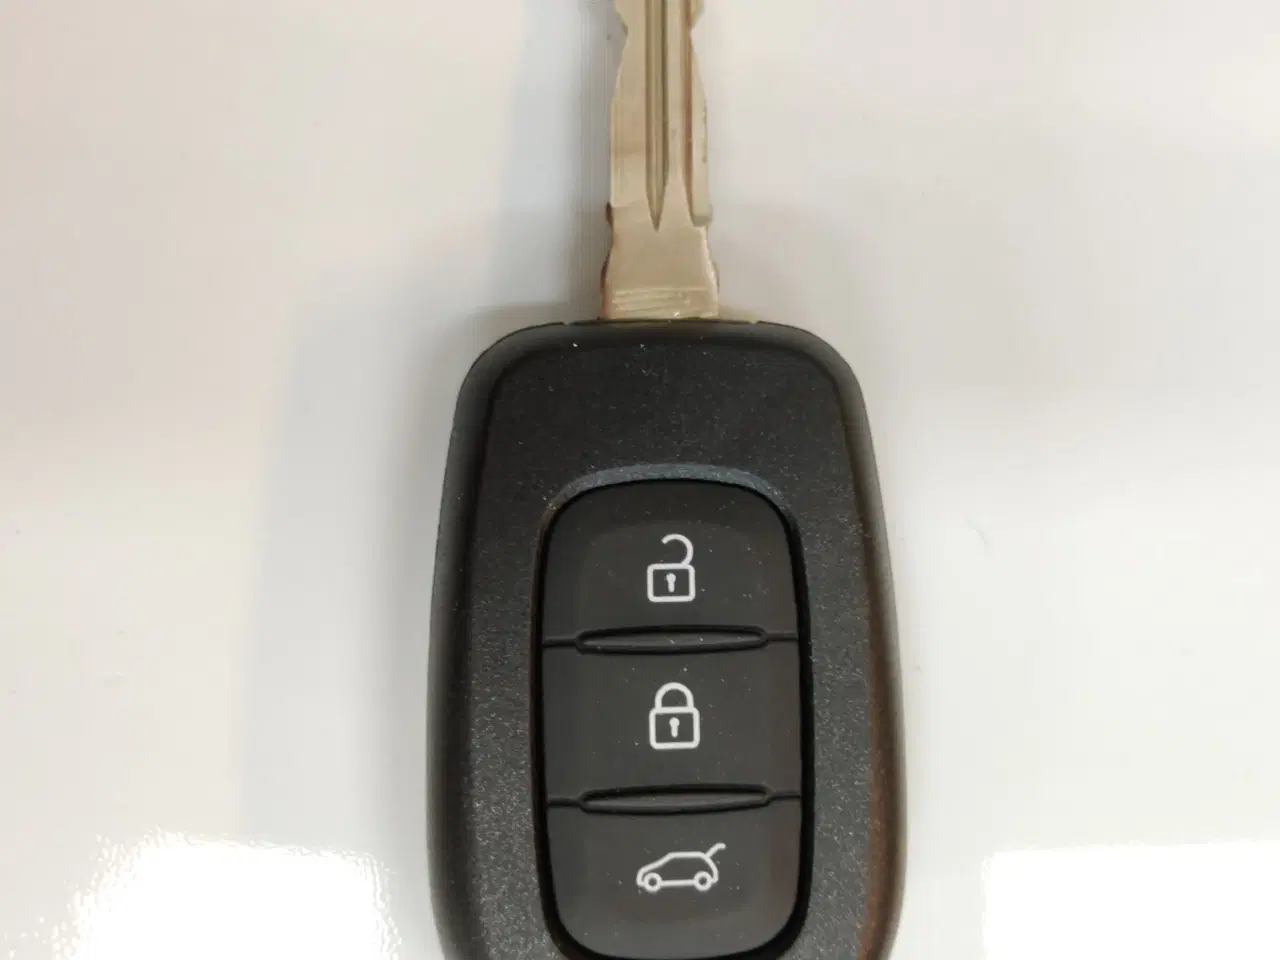 Billede 1 - Dacia fjernbetjenings nøgle for Dacia Duster , Sandero , Dokker mv. Ny model.